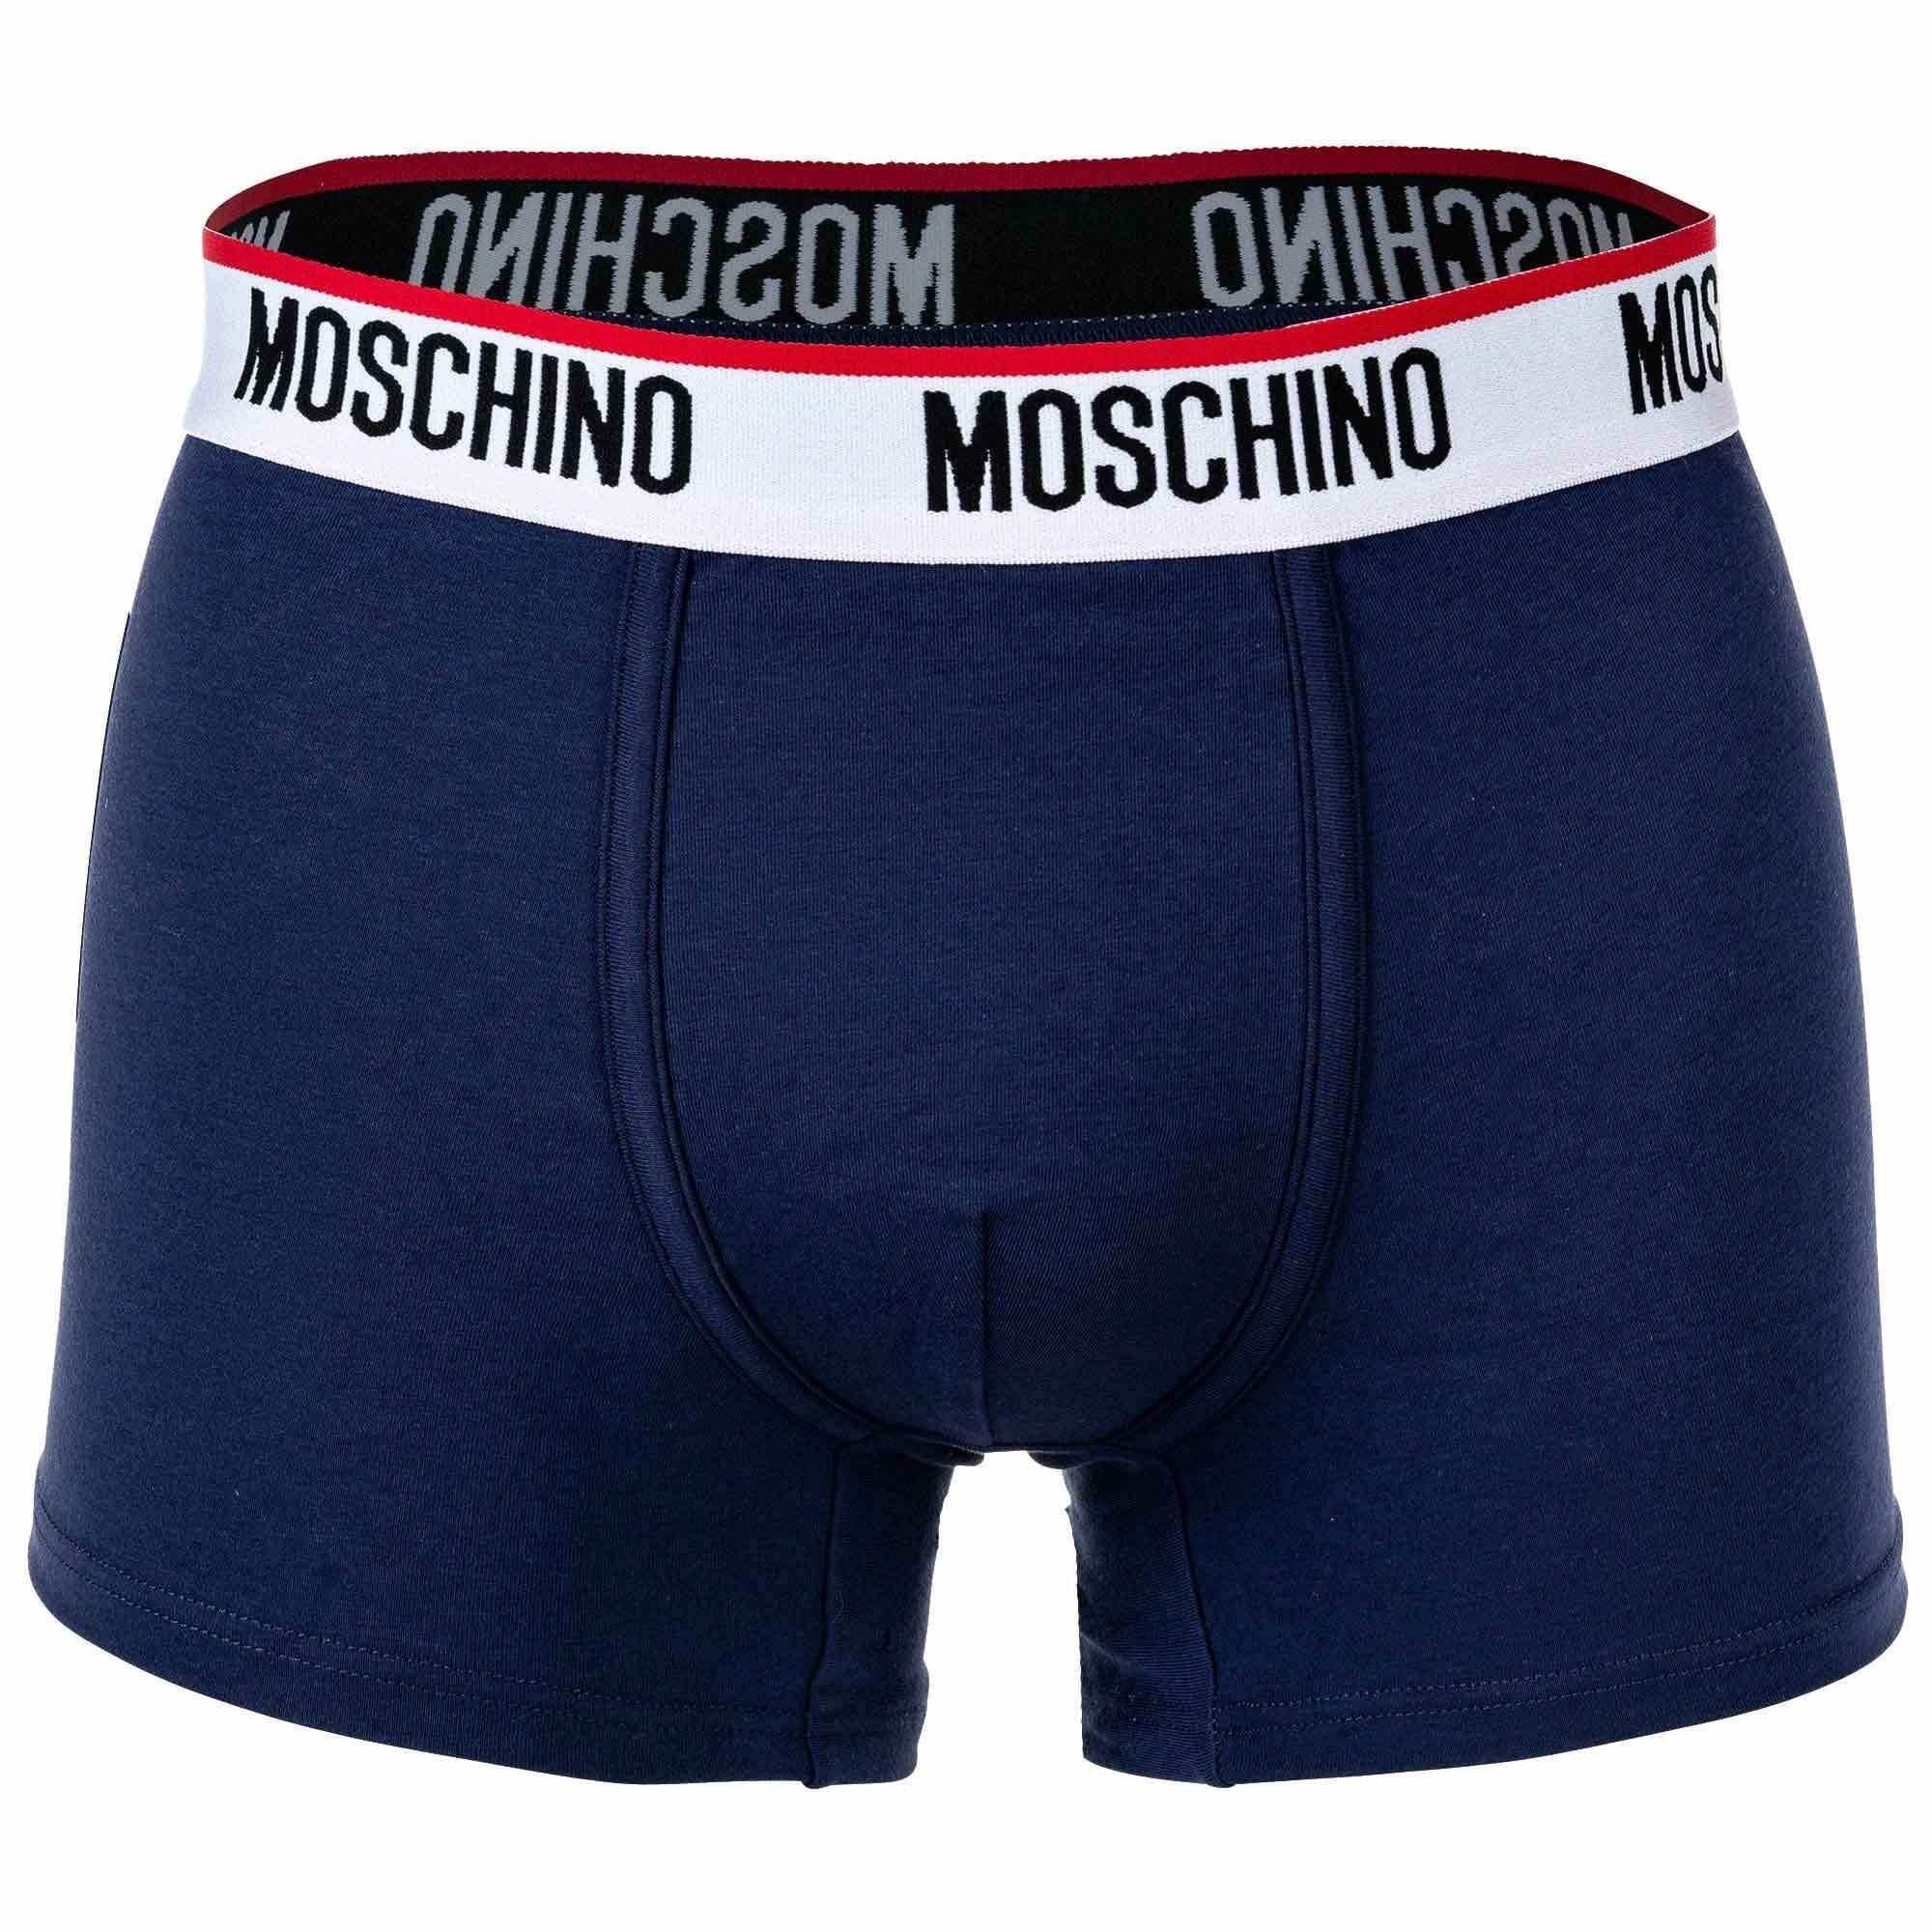 Moschino Boxer Herren Pack Boxershorts, - Unterhose Trunks 2er Blau